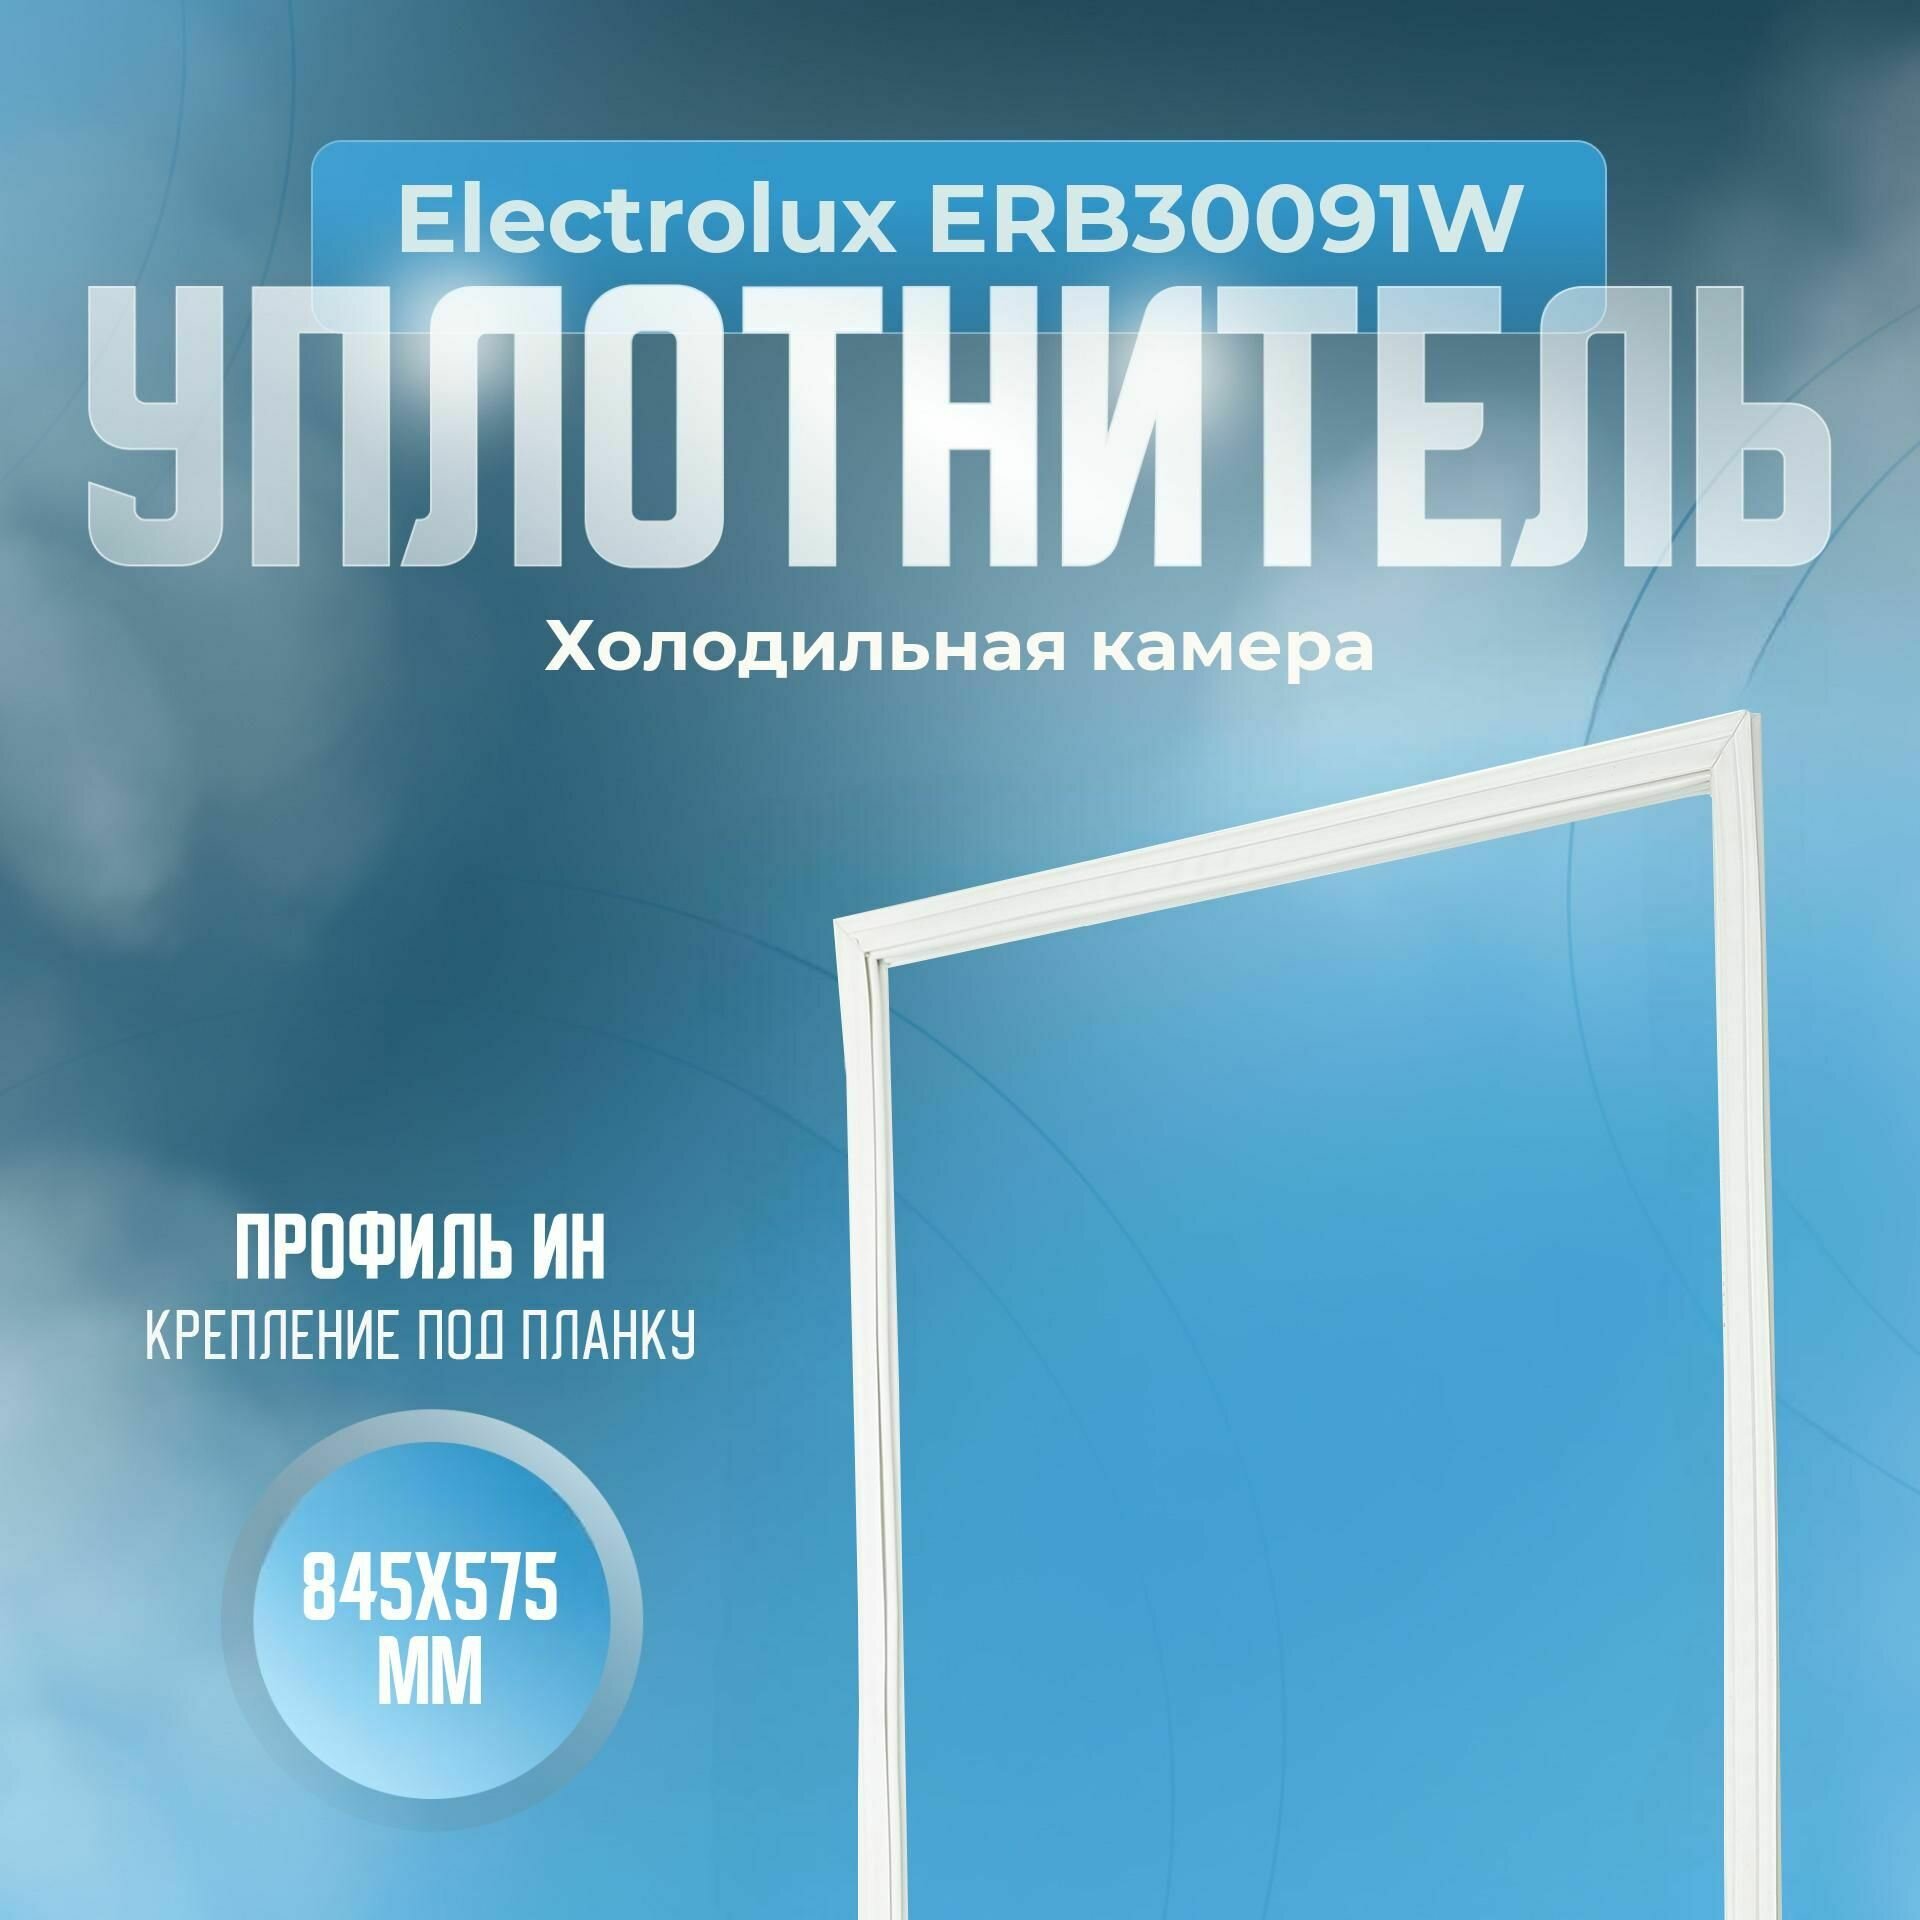 Уплотнитель Electrolux ERB30091W. х. к, Размер - 845х575 мм. ИН